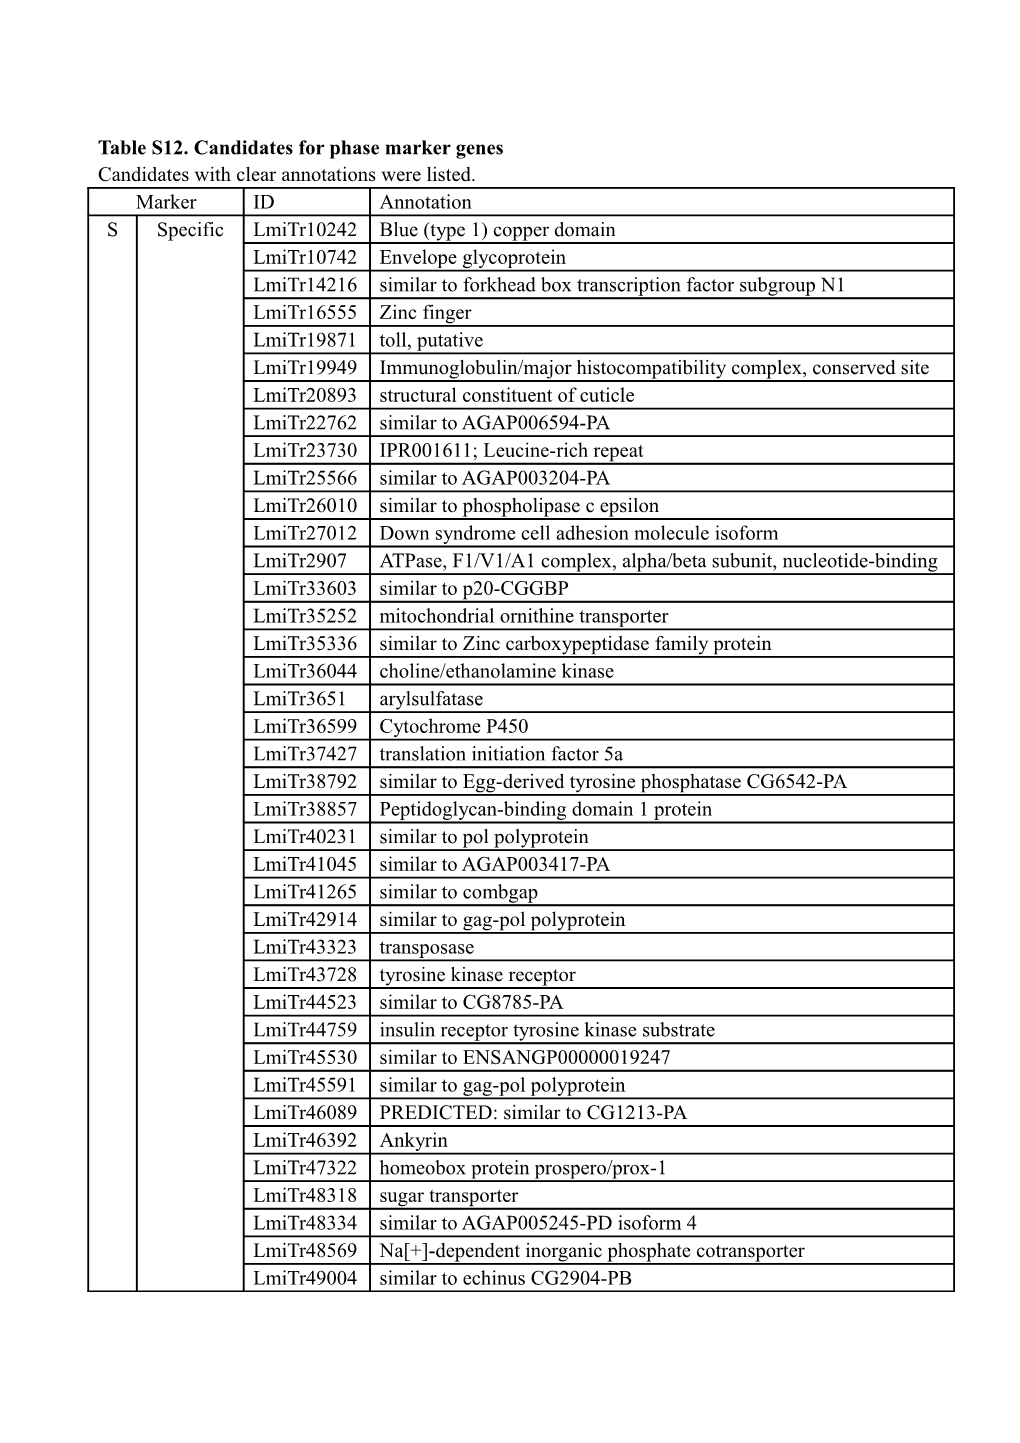 Supplementary Table List